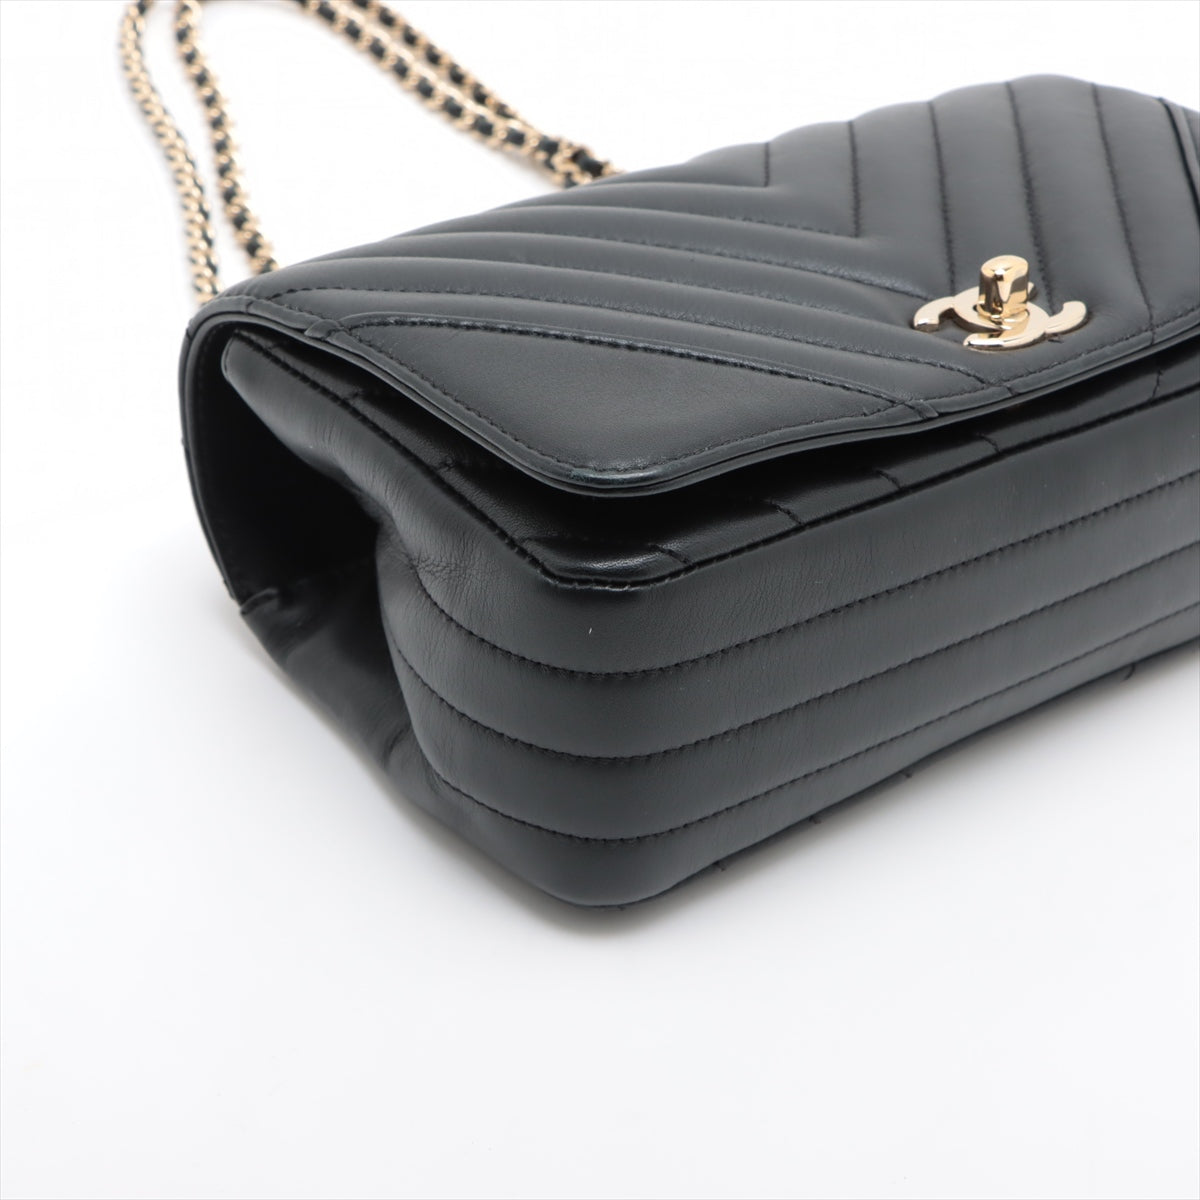 Chanel V Stitch Lambskin Chain shoulder bag Black Gold Metal fittings 24XXXXXX